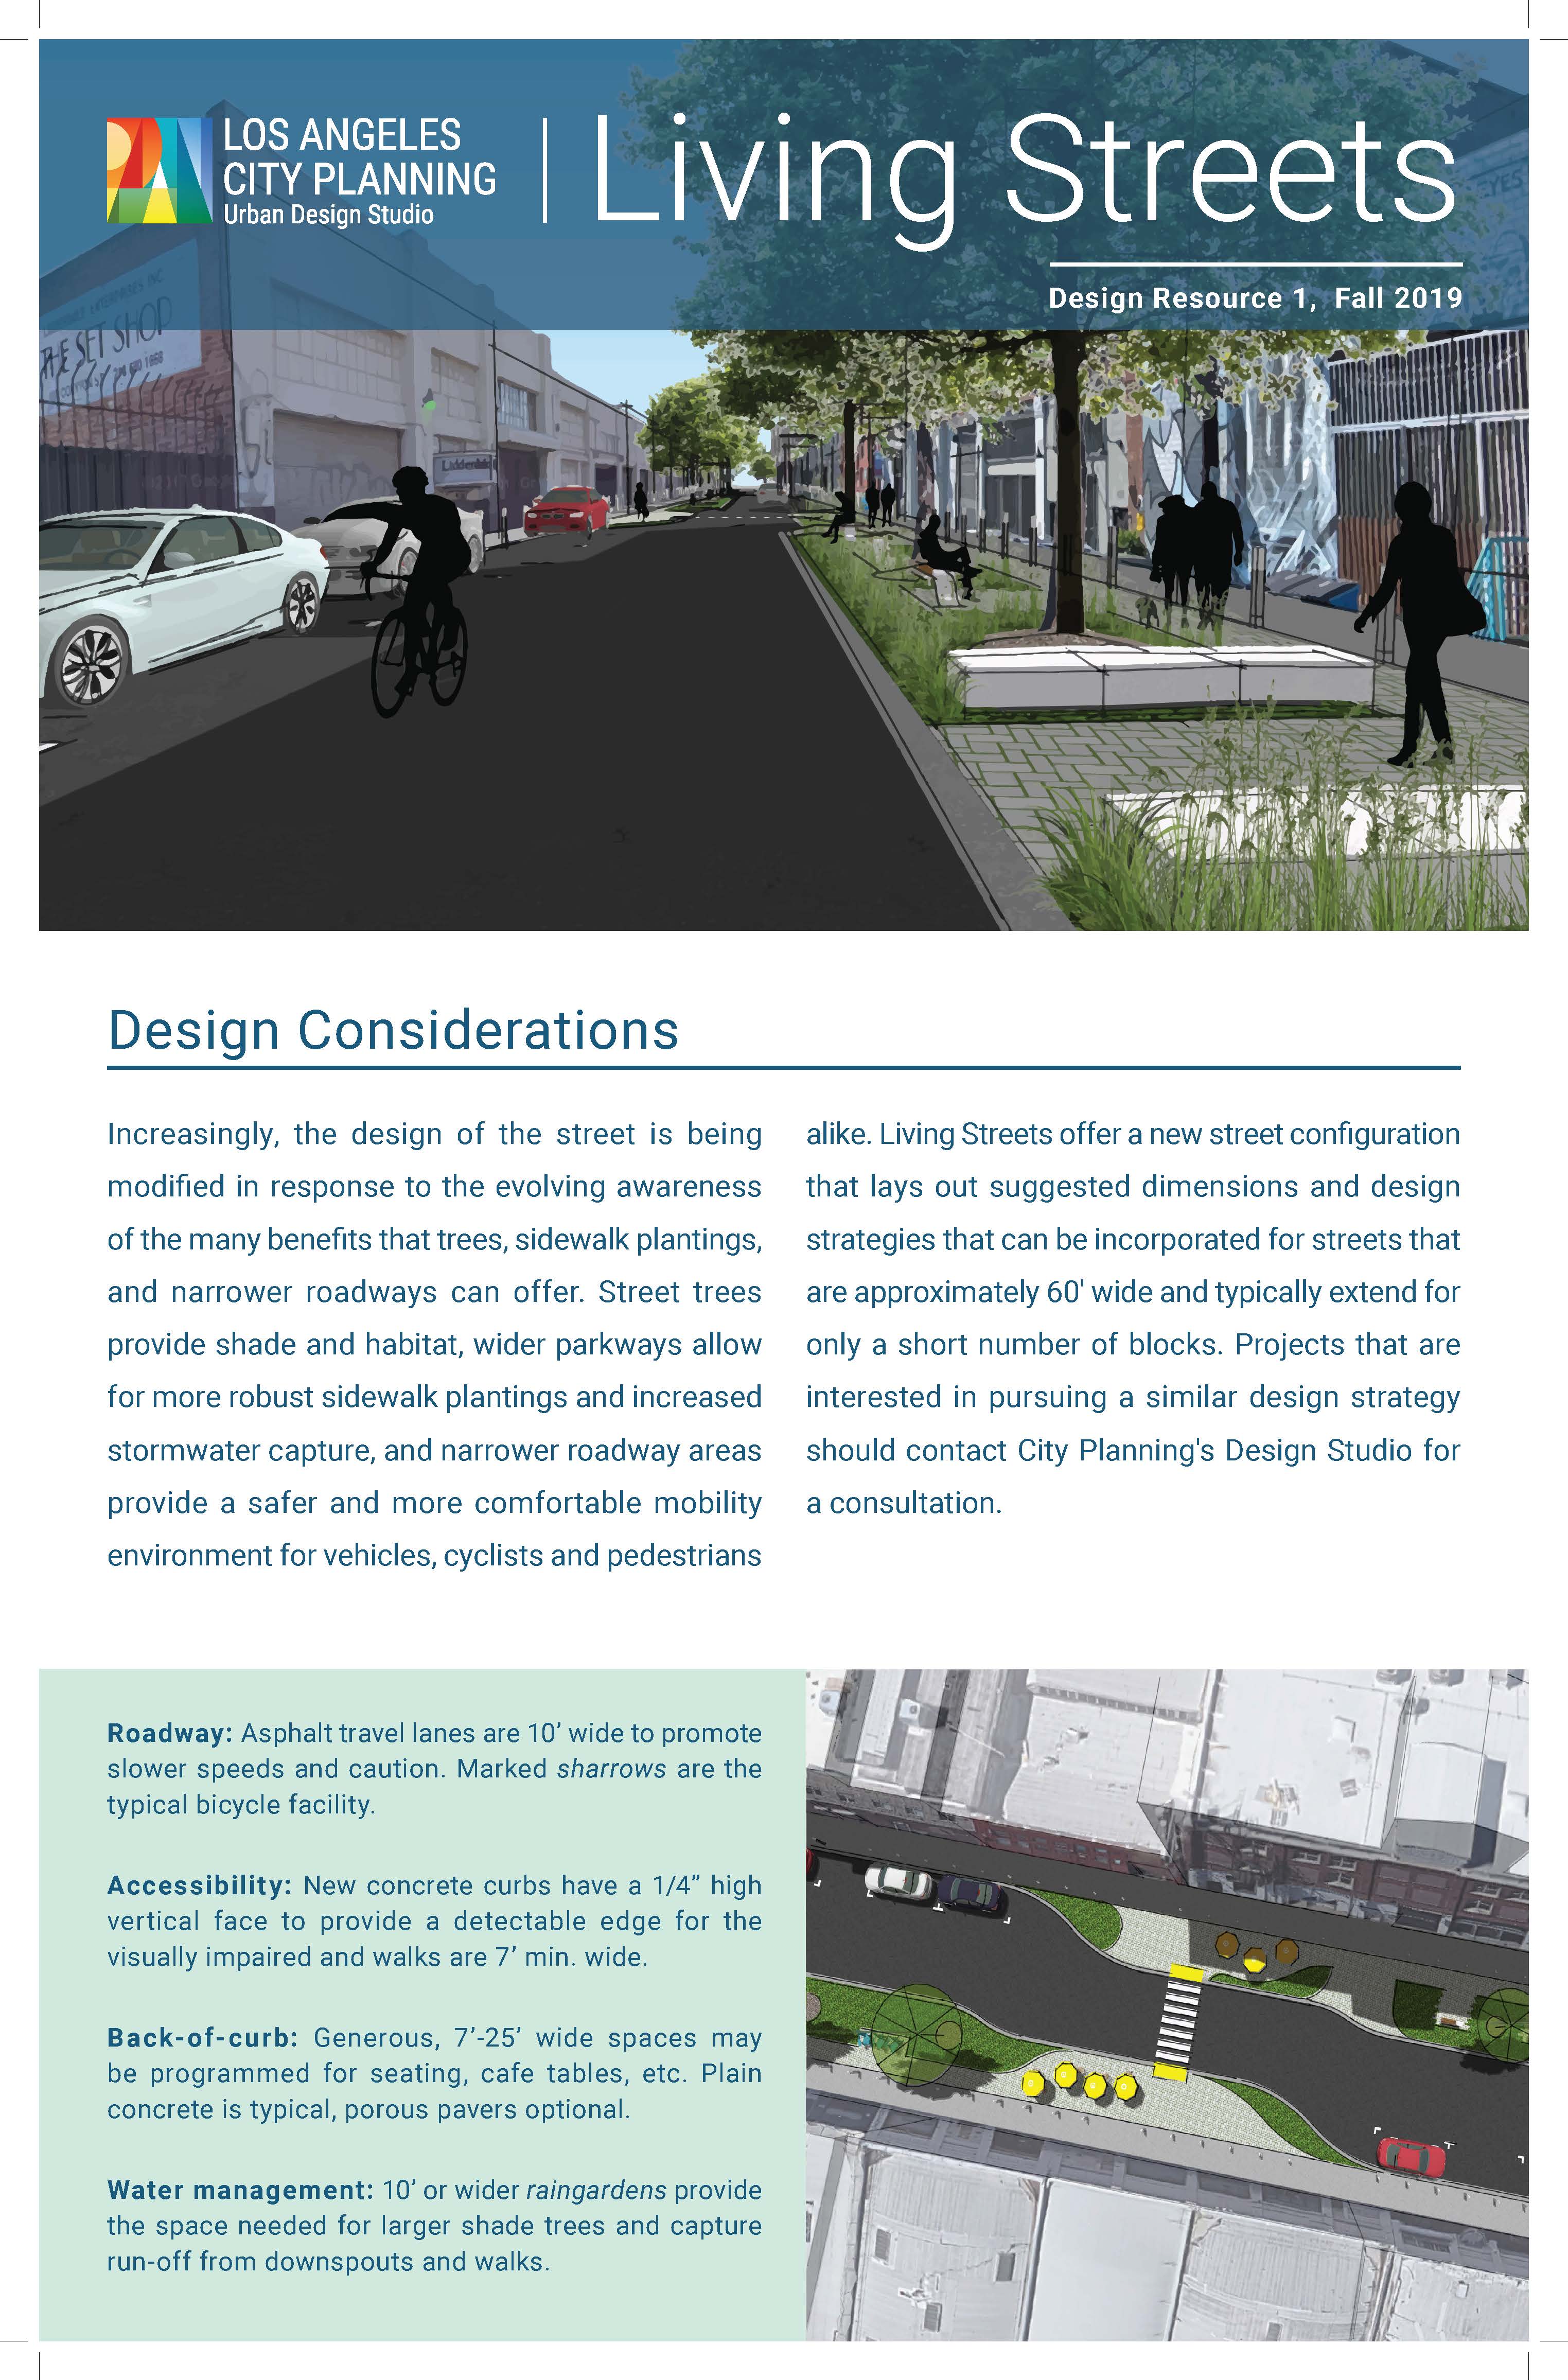 Design Resource 1: Living Streets